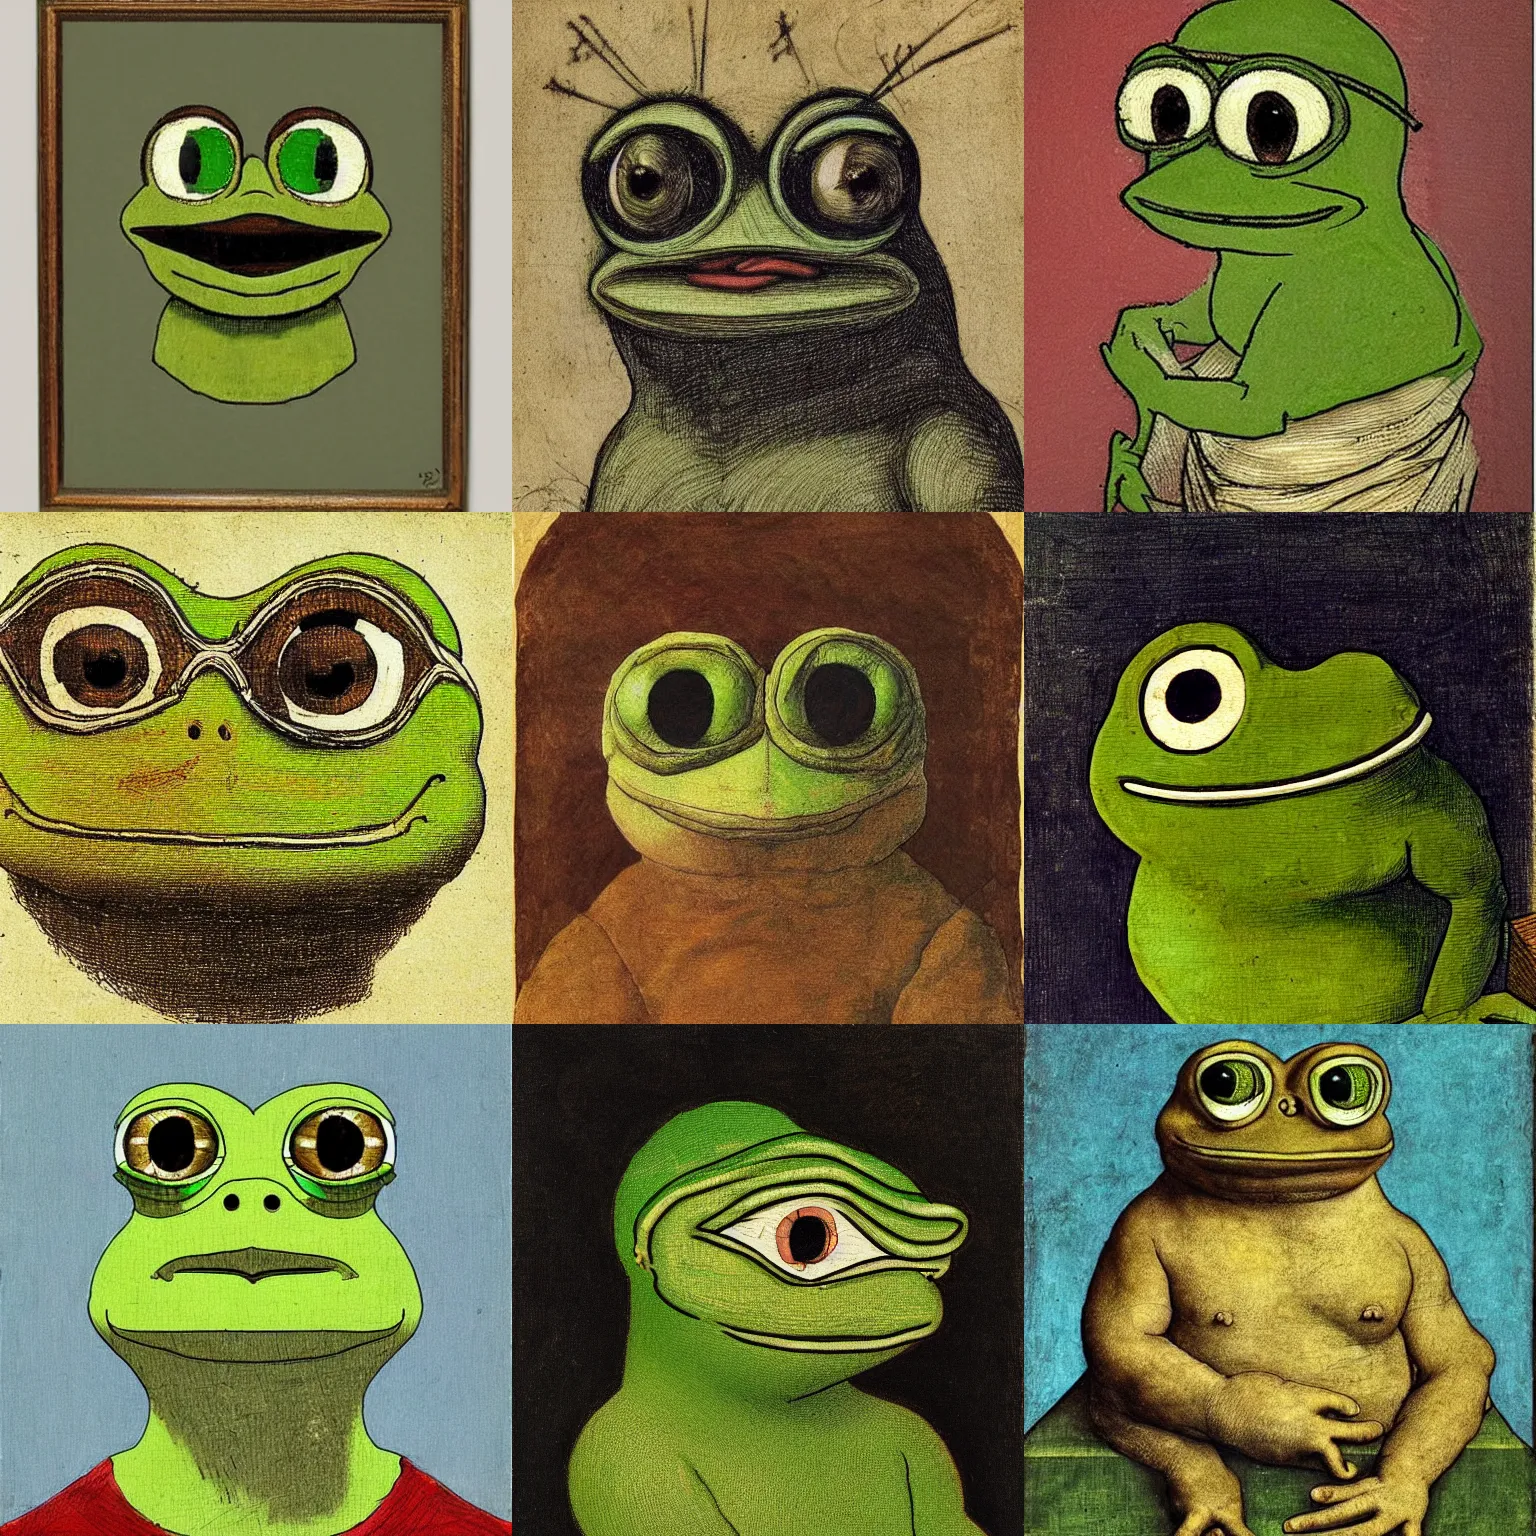 Prompt: a portrait of pepe the frog by leonardo da vinci